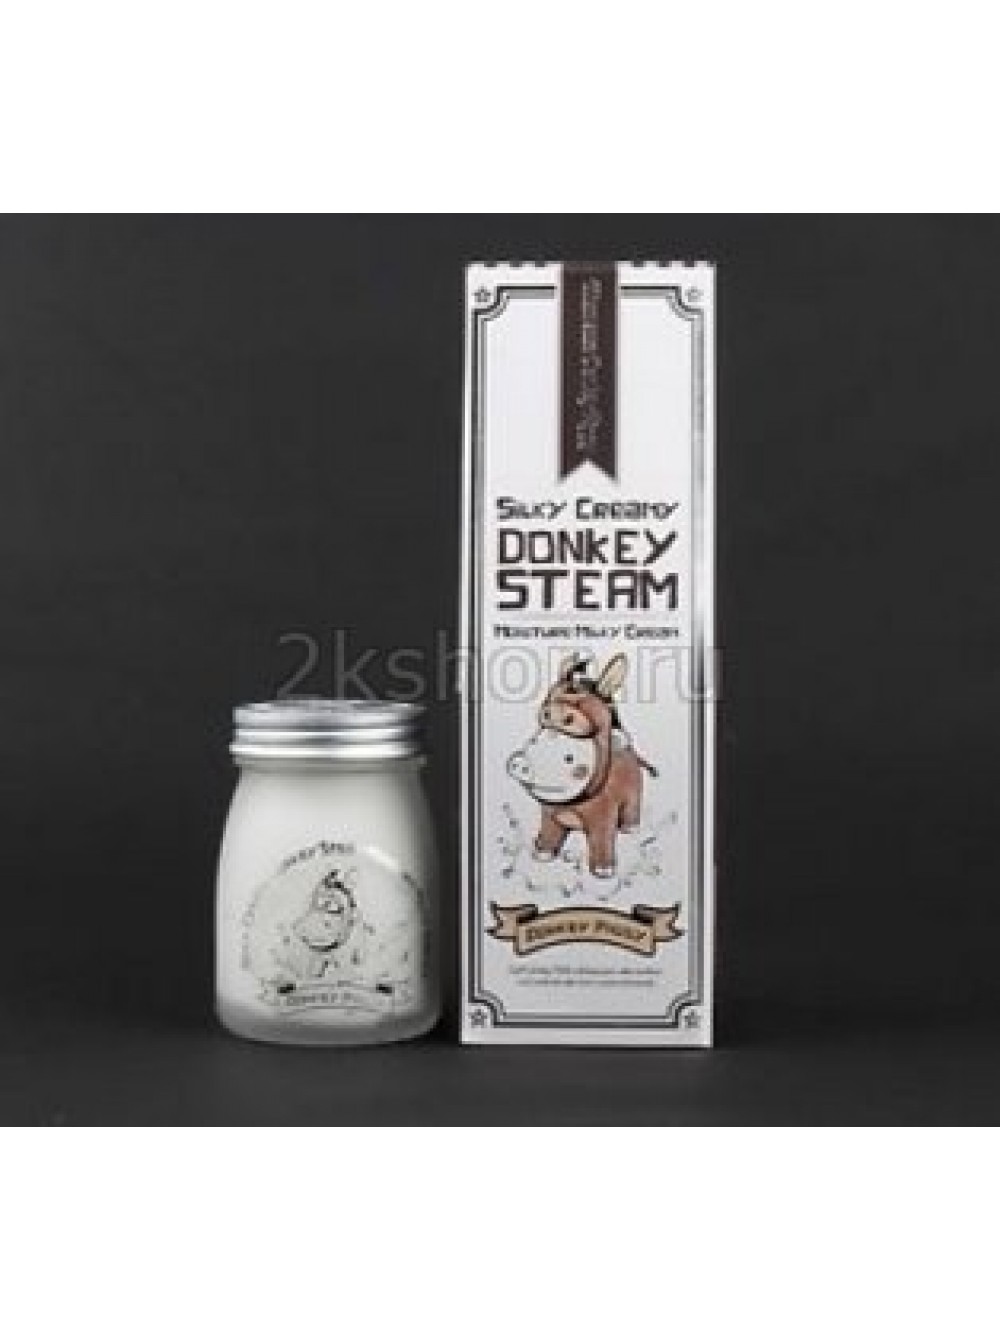 Silky cream donkey steam moisture milky cream фото 57